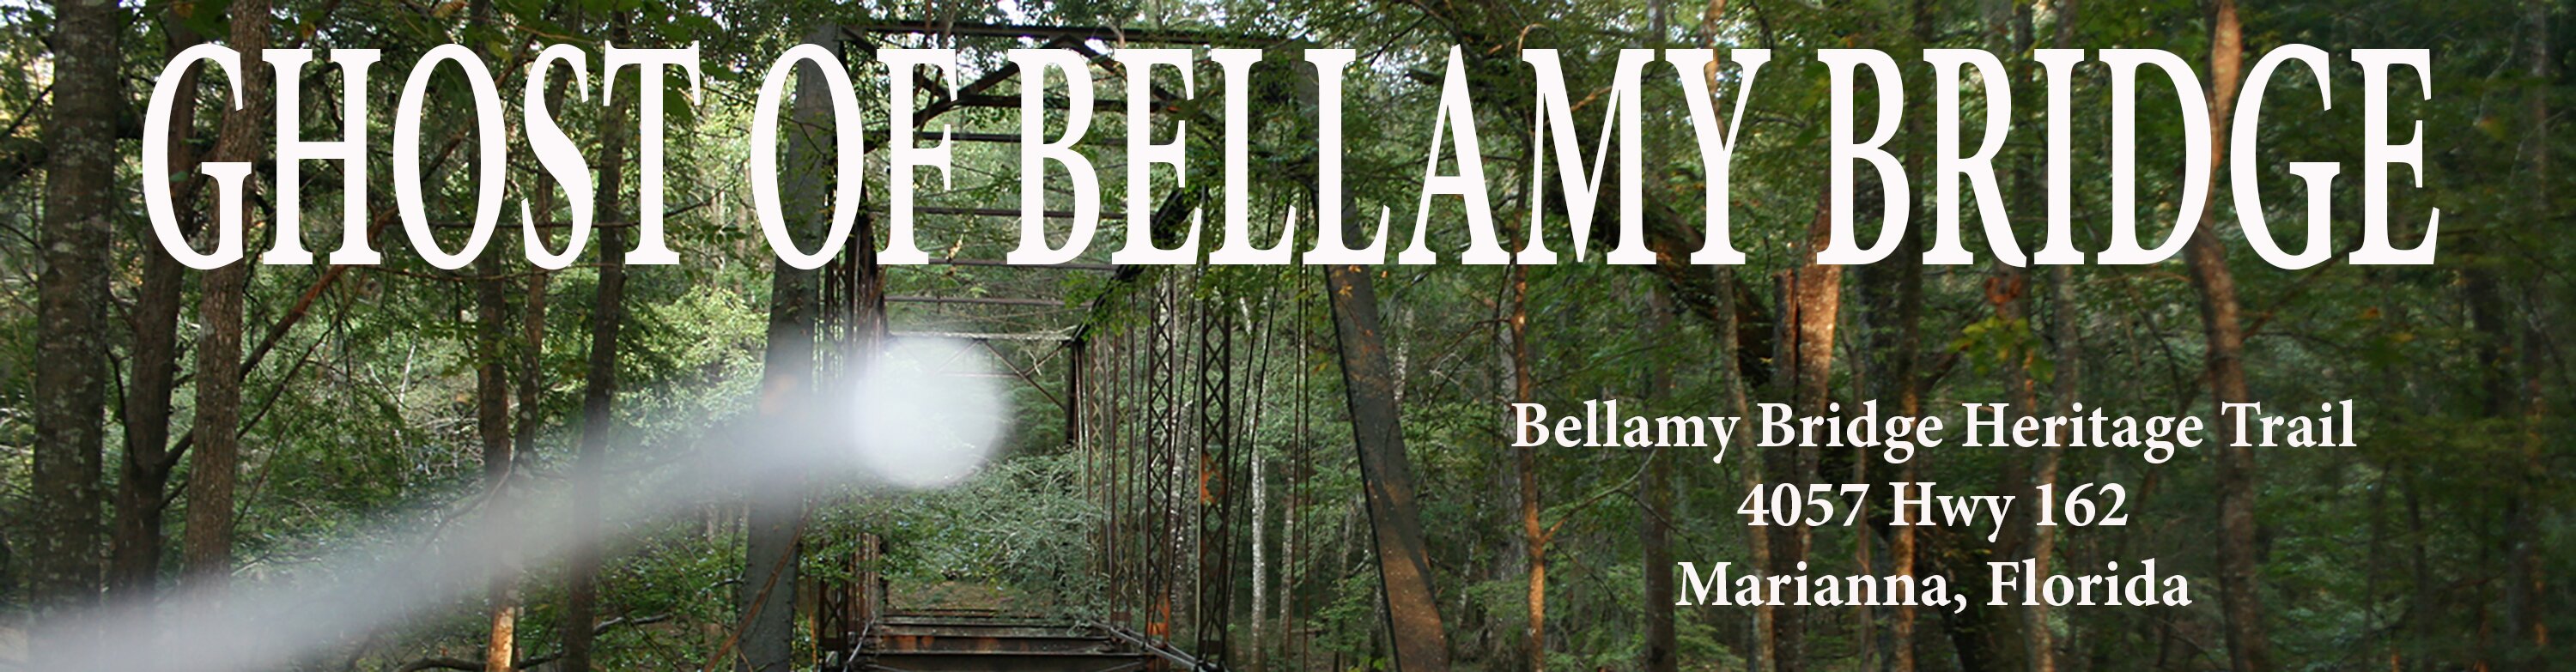 Bellamy Bridge Heritage Trail